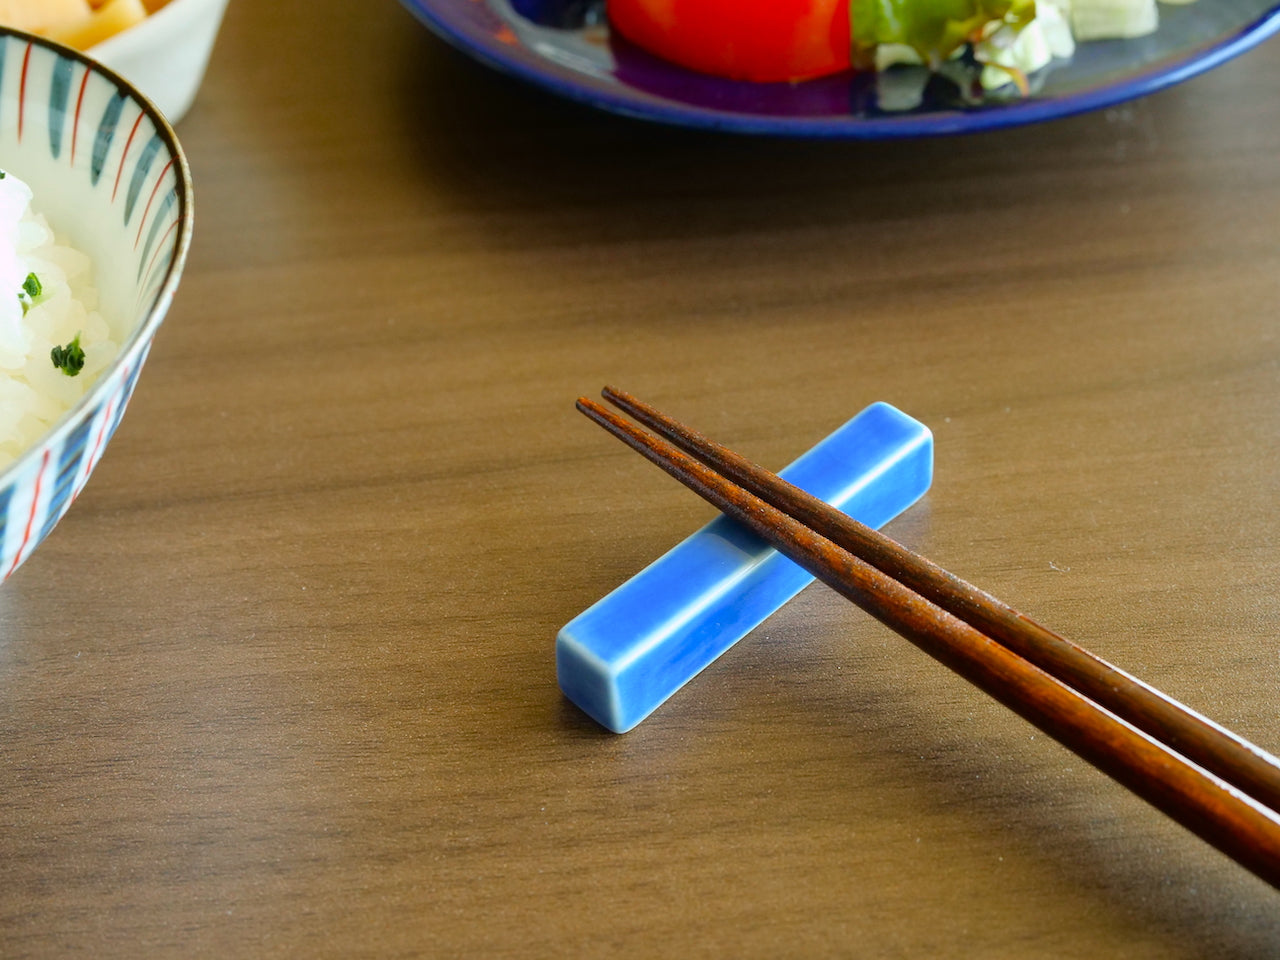 using the blue chopstick rest